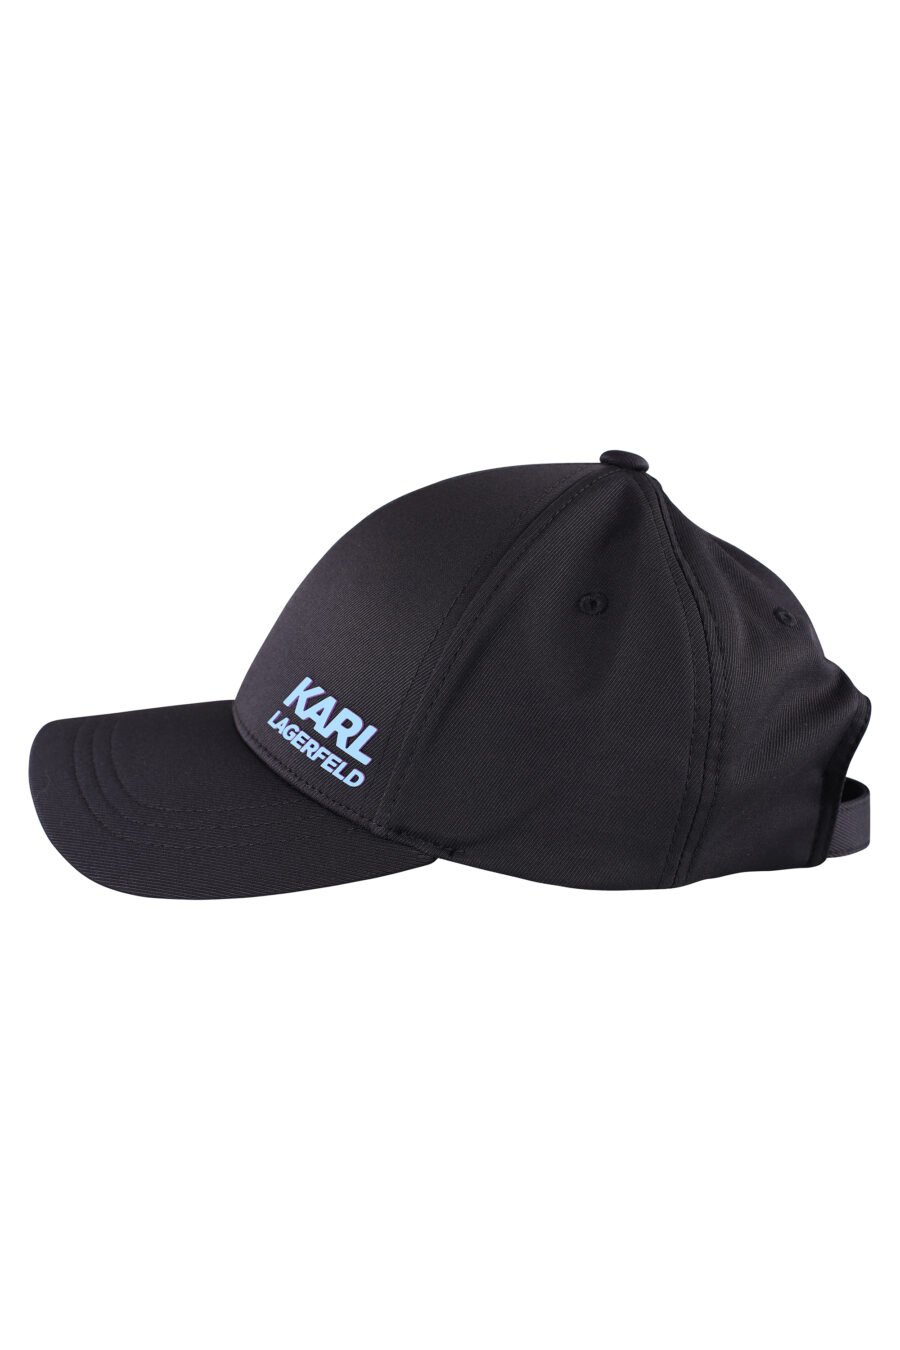 Black cap with sky blue logo - IMG 8528